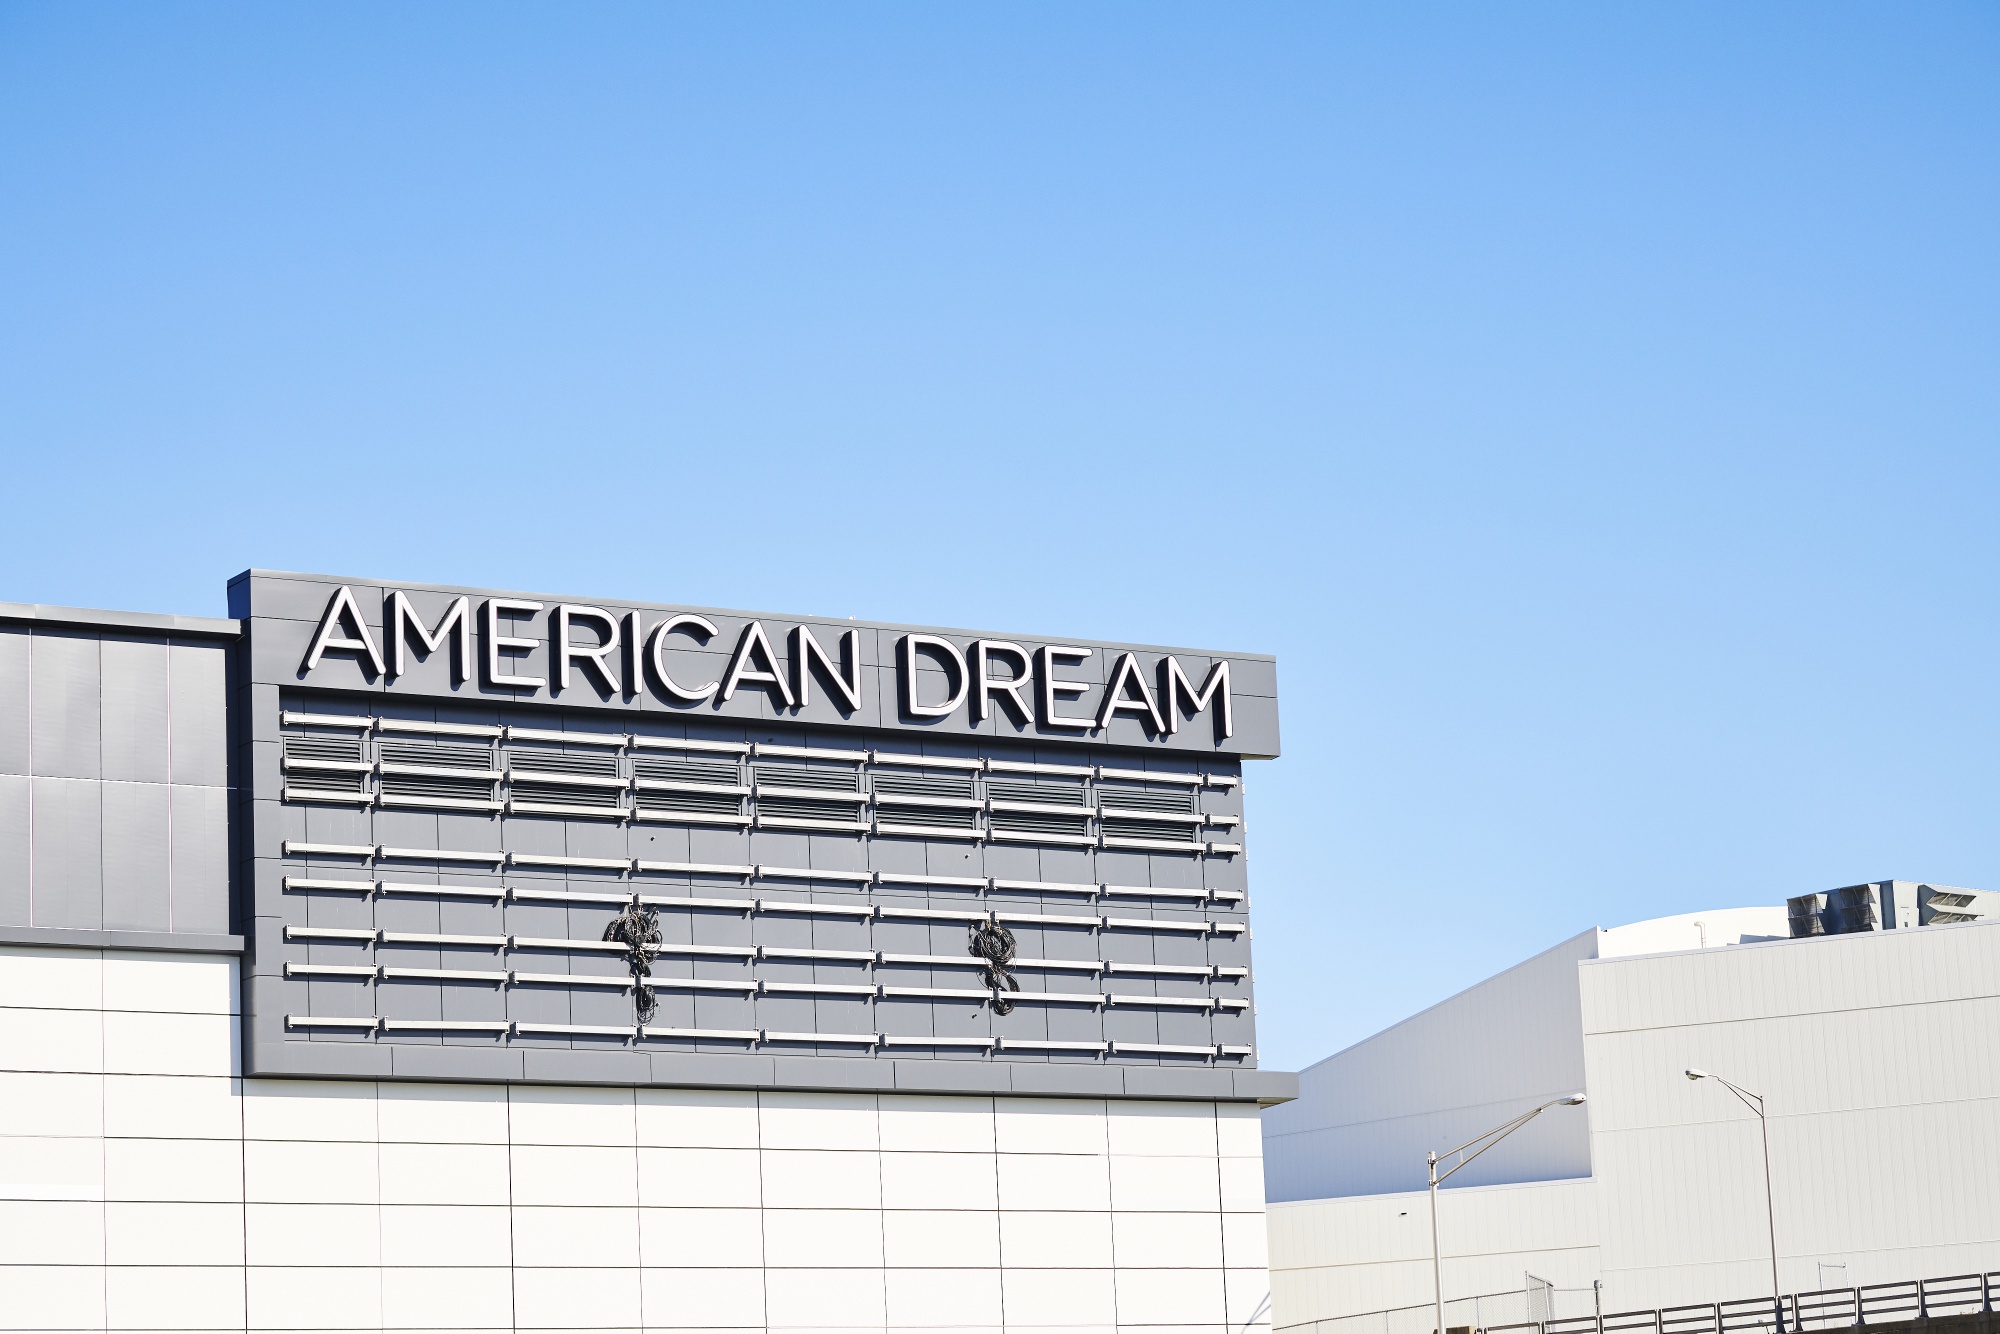 American Dream, NJ's massive entertainment and shopping complex, opens